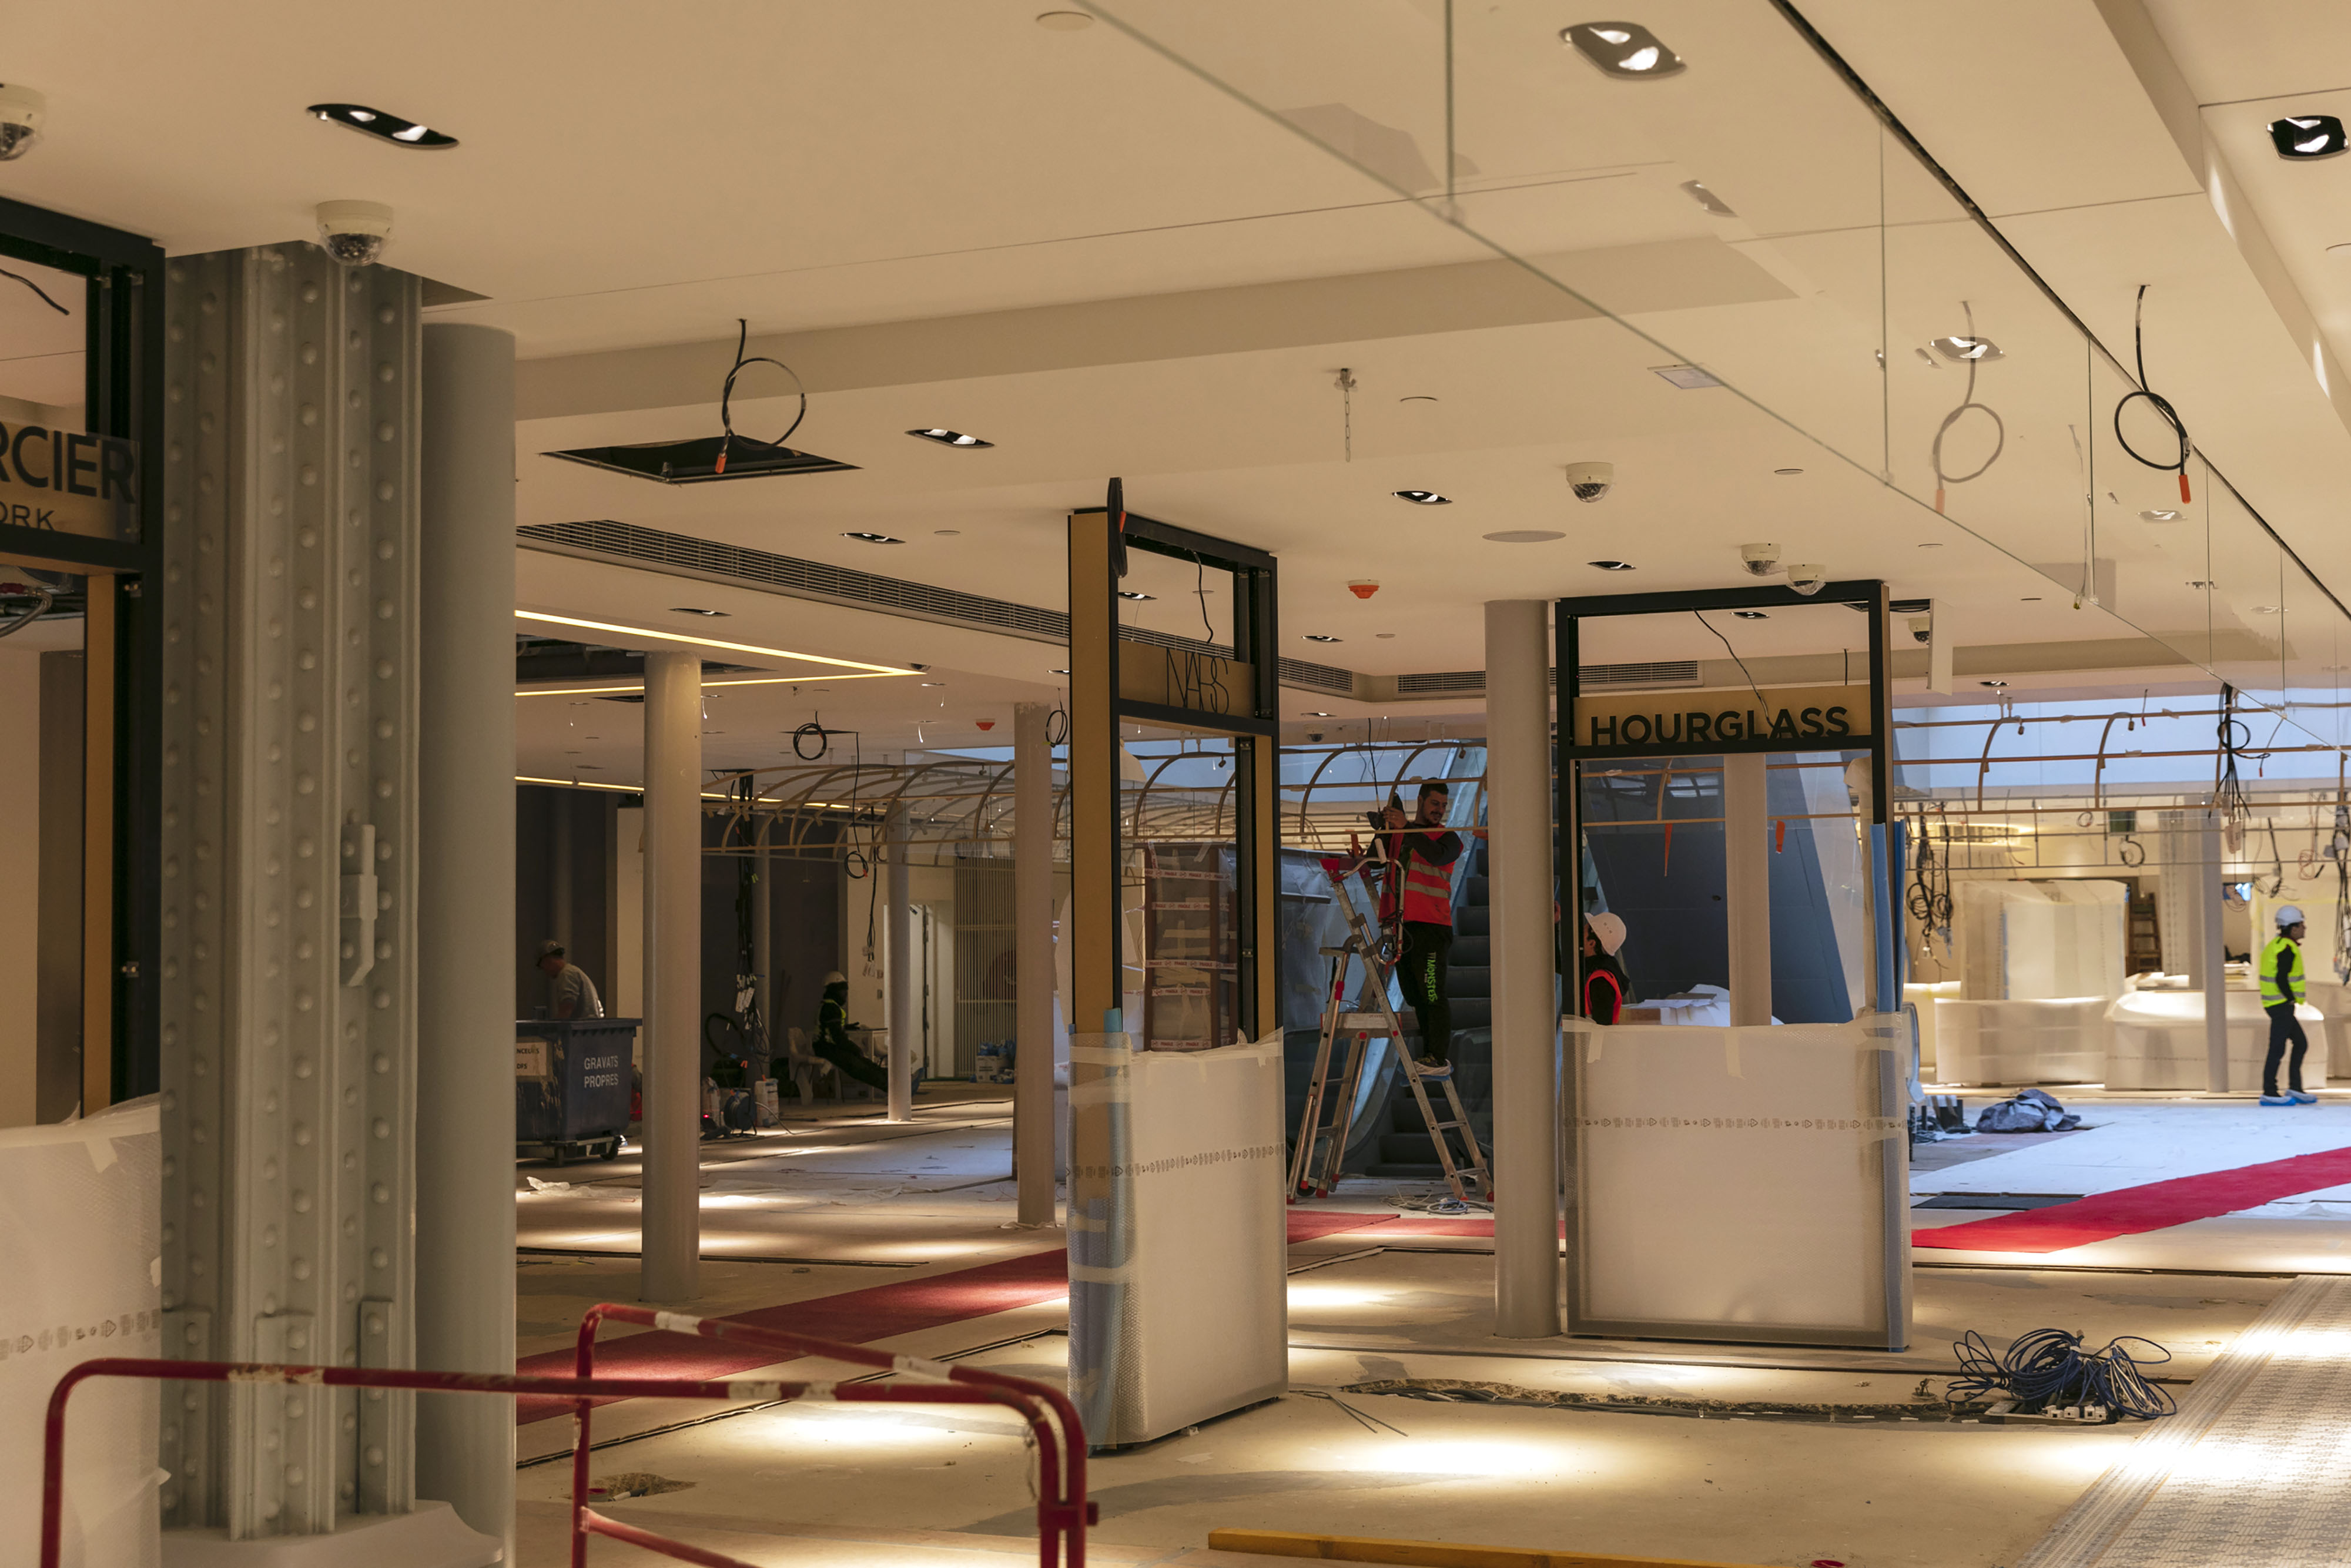 LVMH's Billion-Dollar Department Store, La Samaritaine Re-Opens In